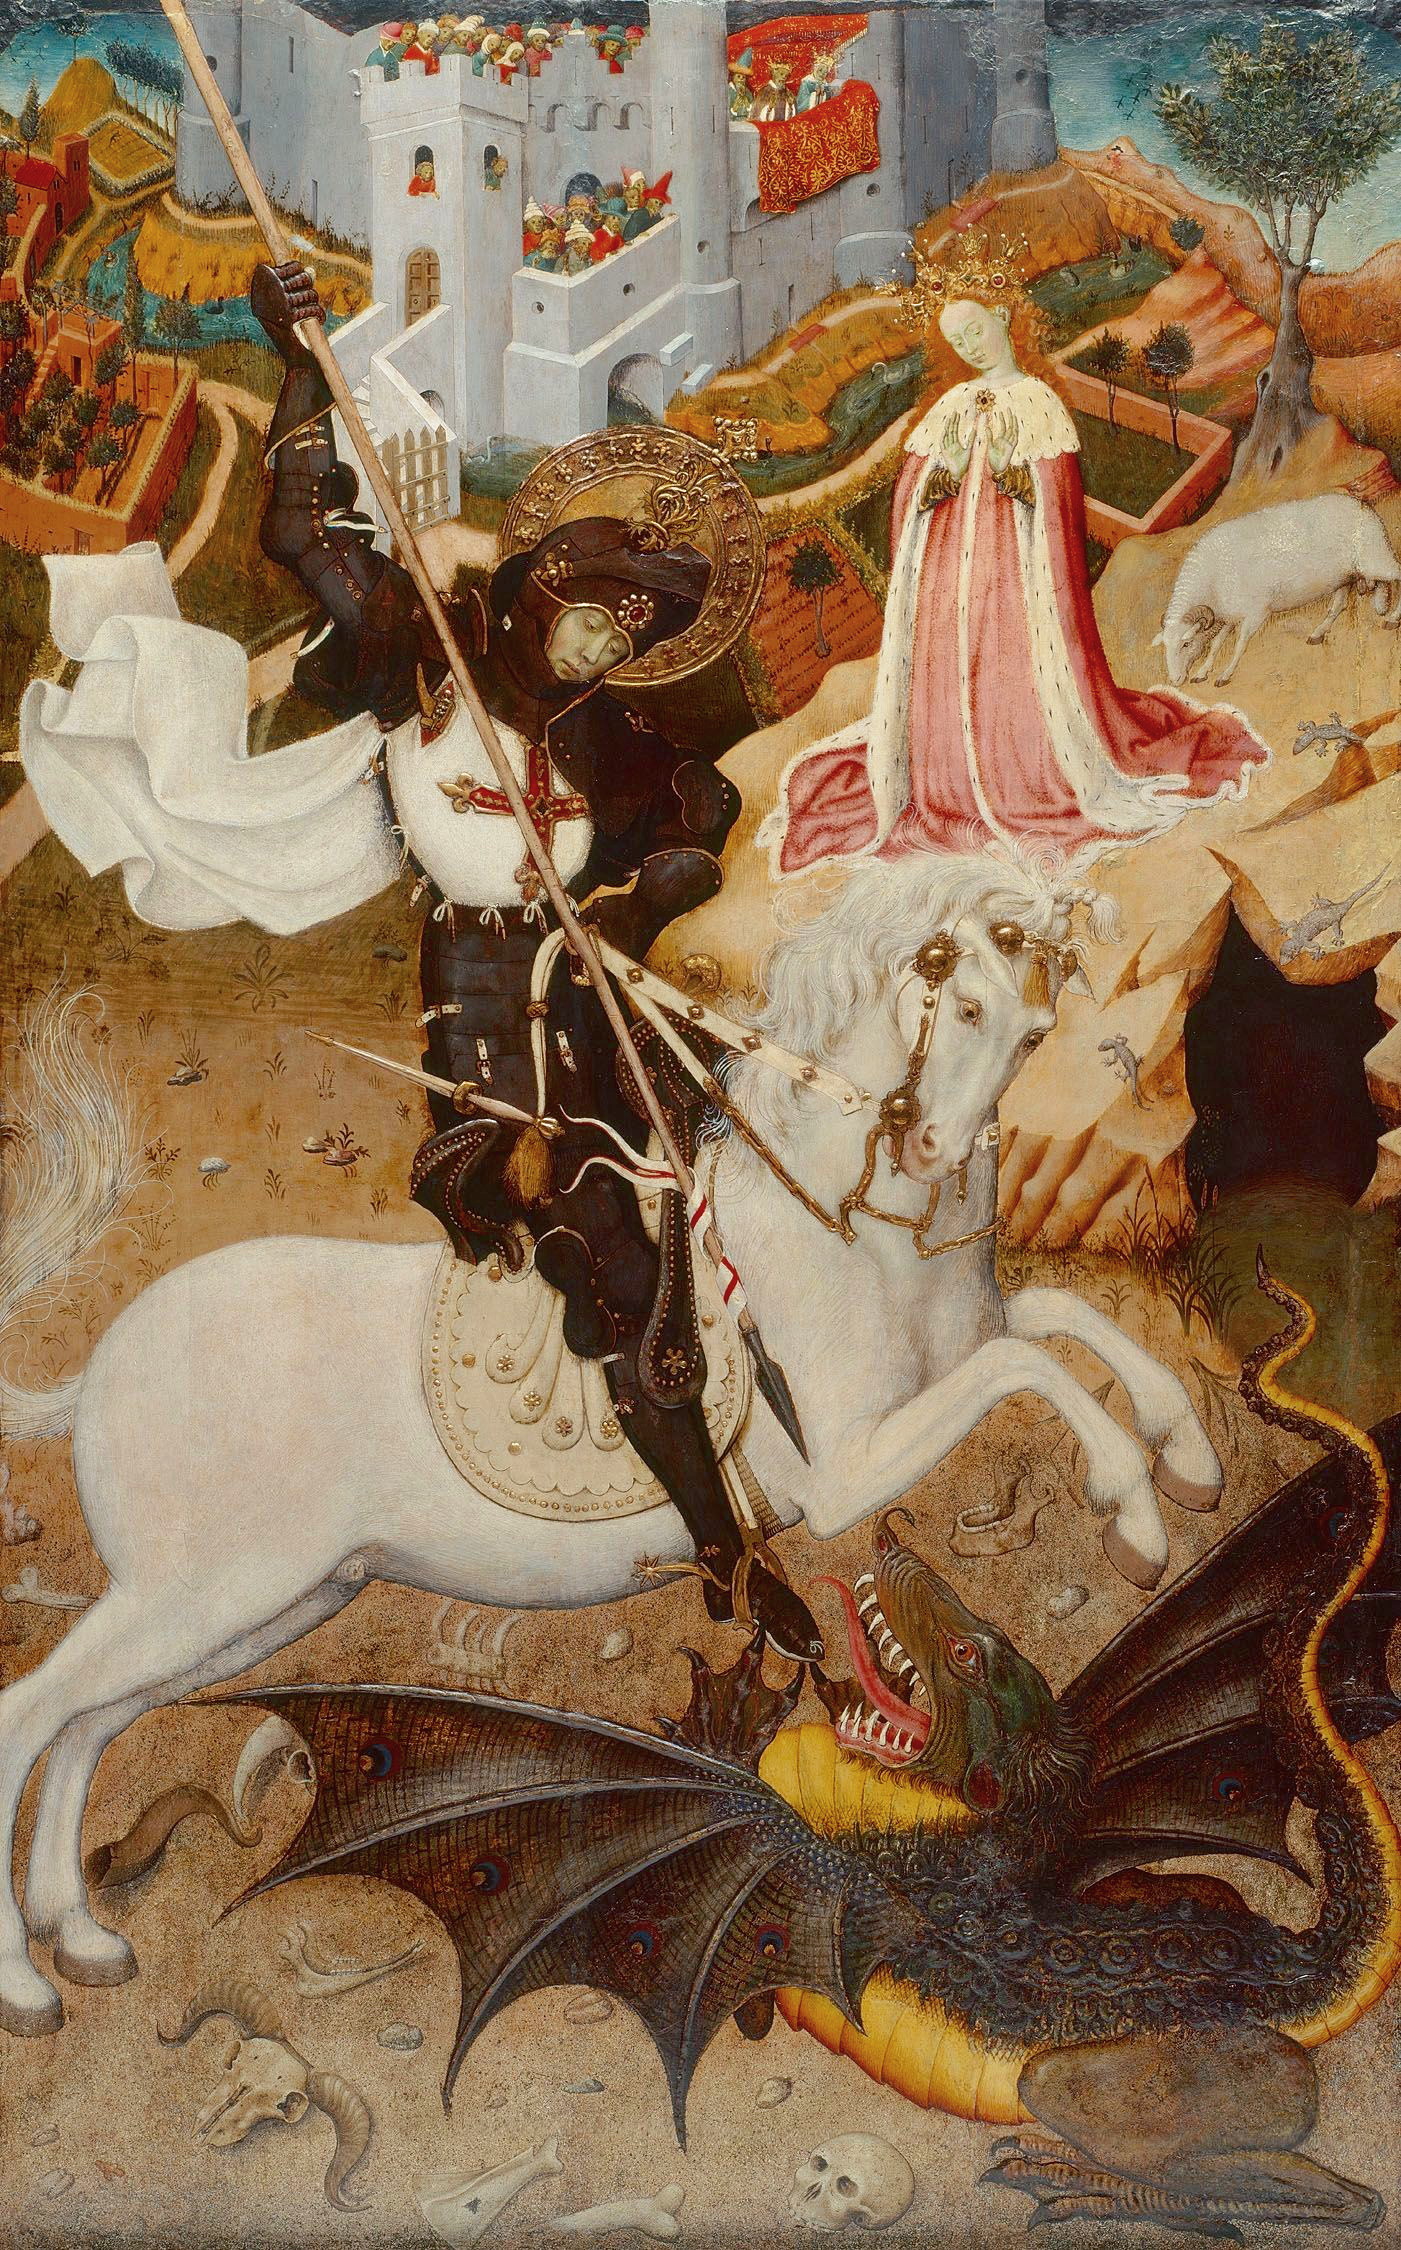 Bernat_Martorell_-_Saint_George_Killing_the_Dragon_1434-35 Art Institute of Chicago